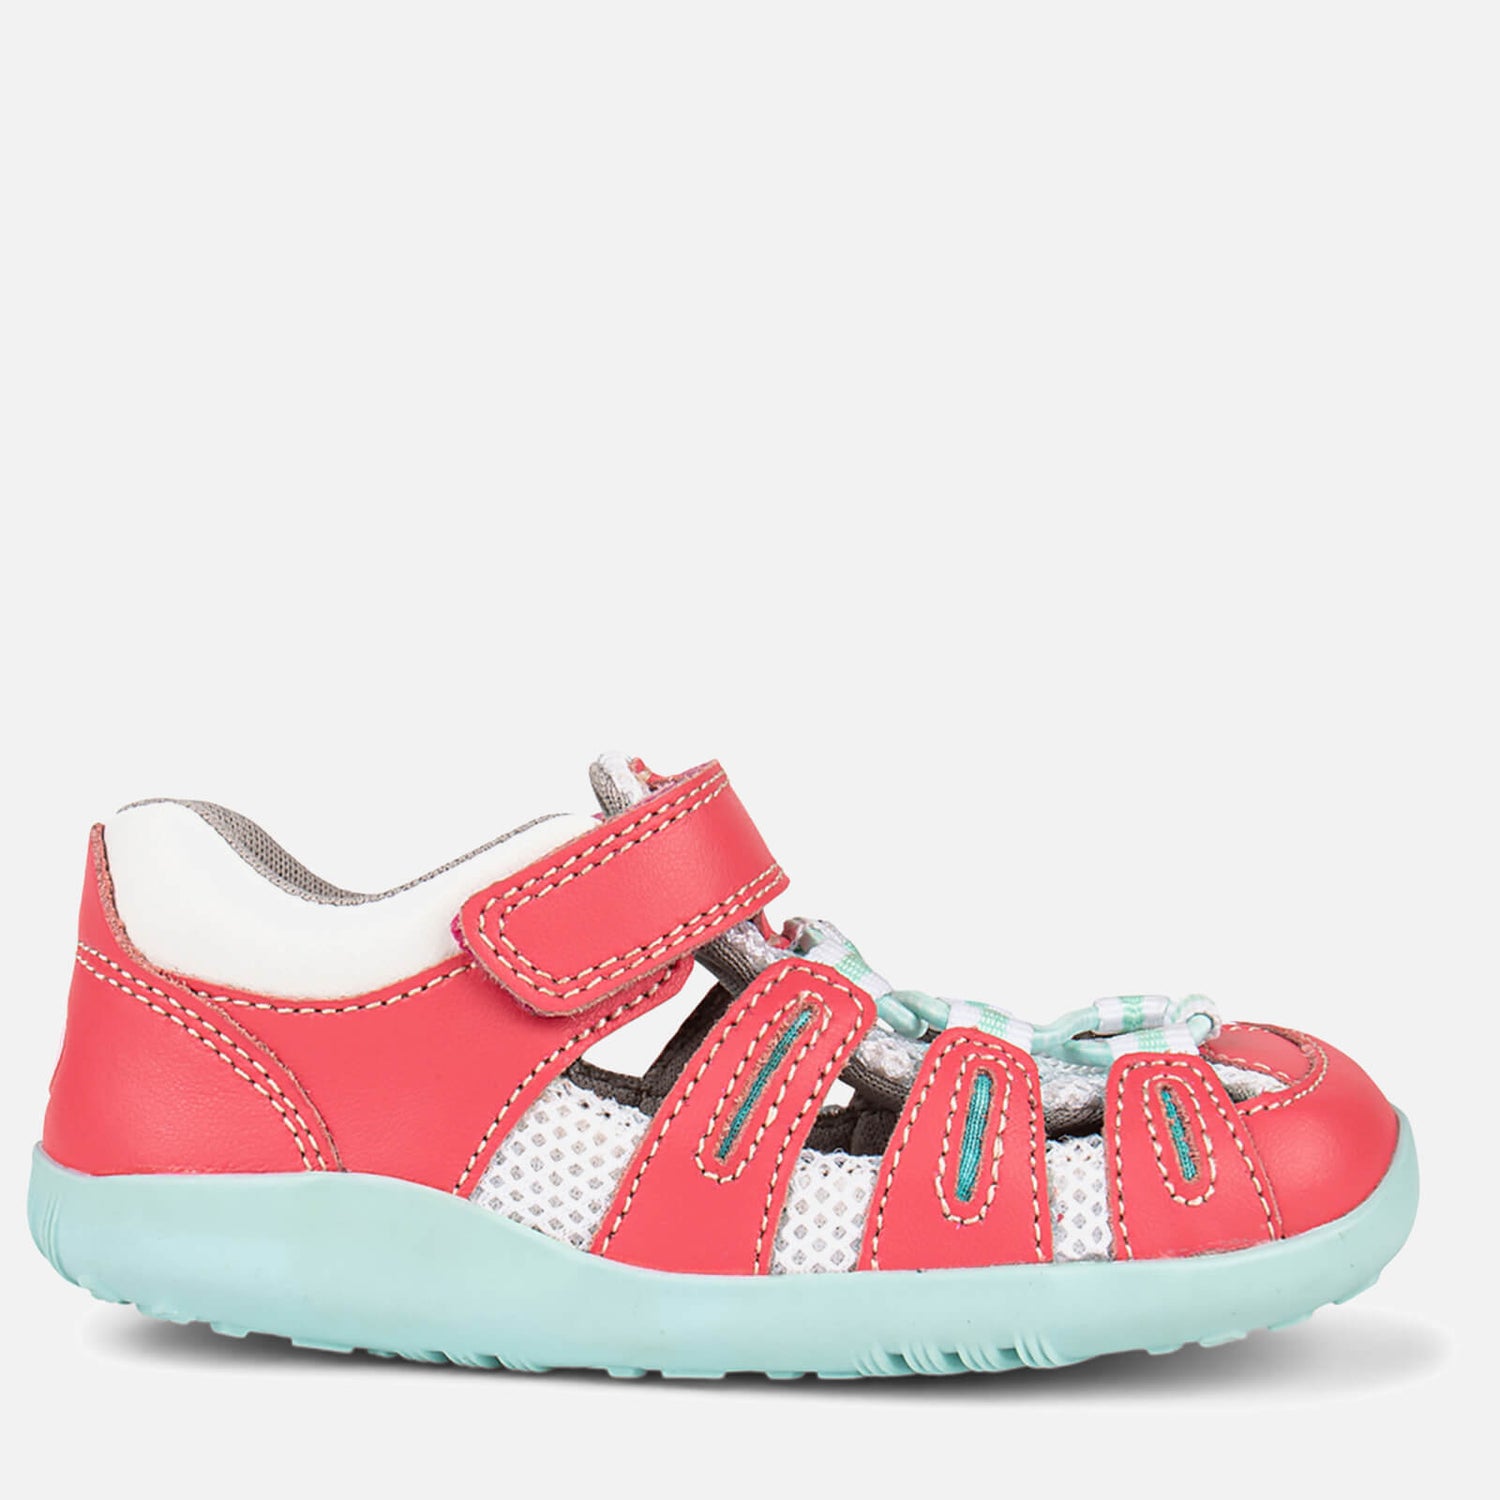 Bobux Girls' I-Walk Summit Water Shoes - Guava Mint - UK 7 Toddler